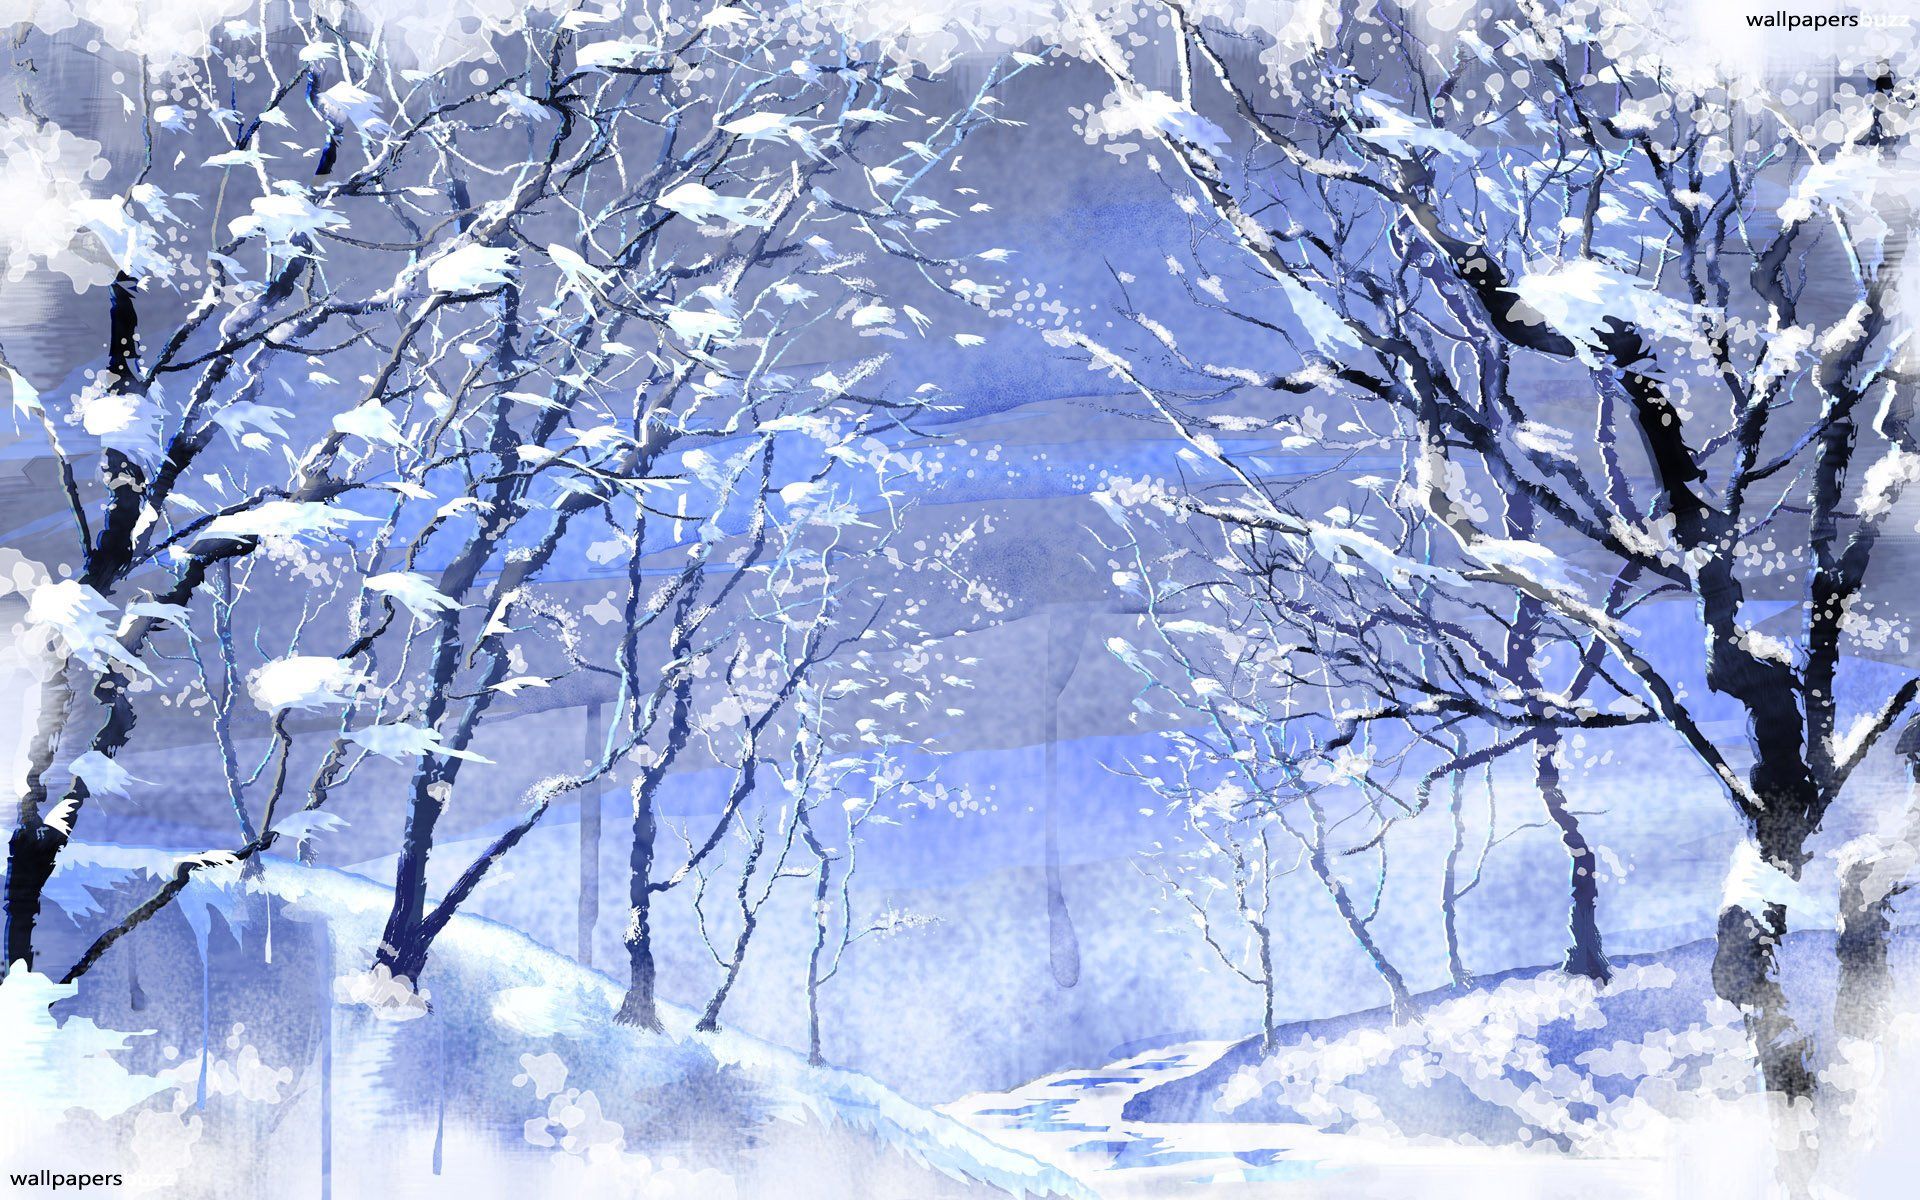 Snowy Anime Wallpaper. Winter wallpaper, Winter snow